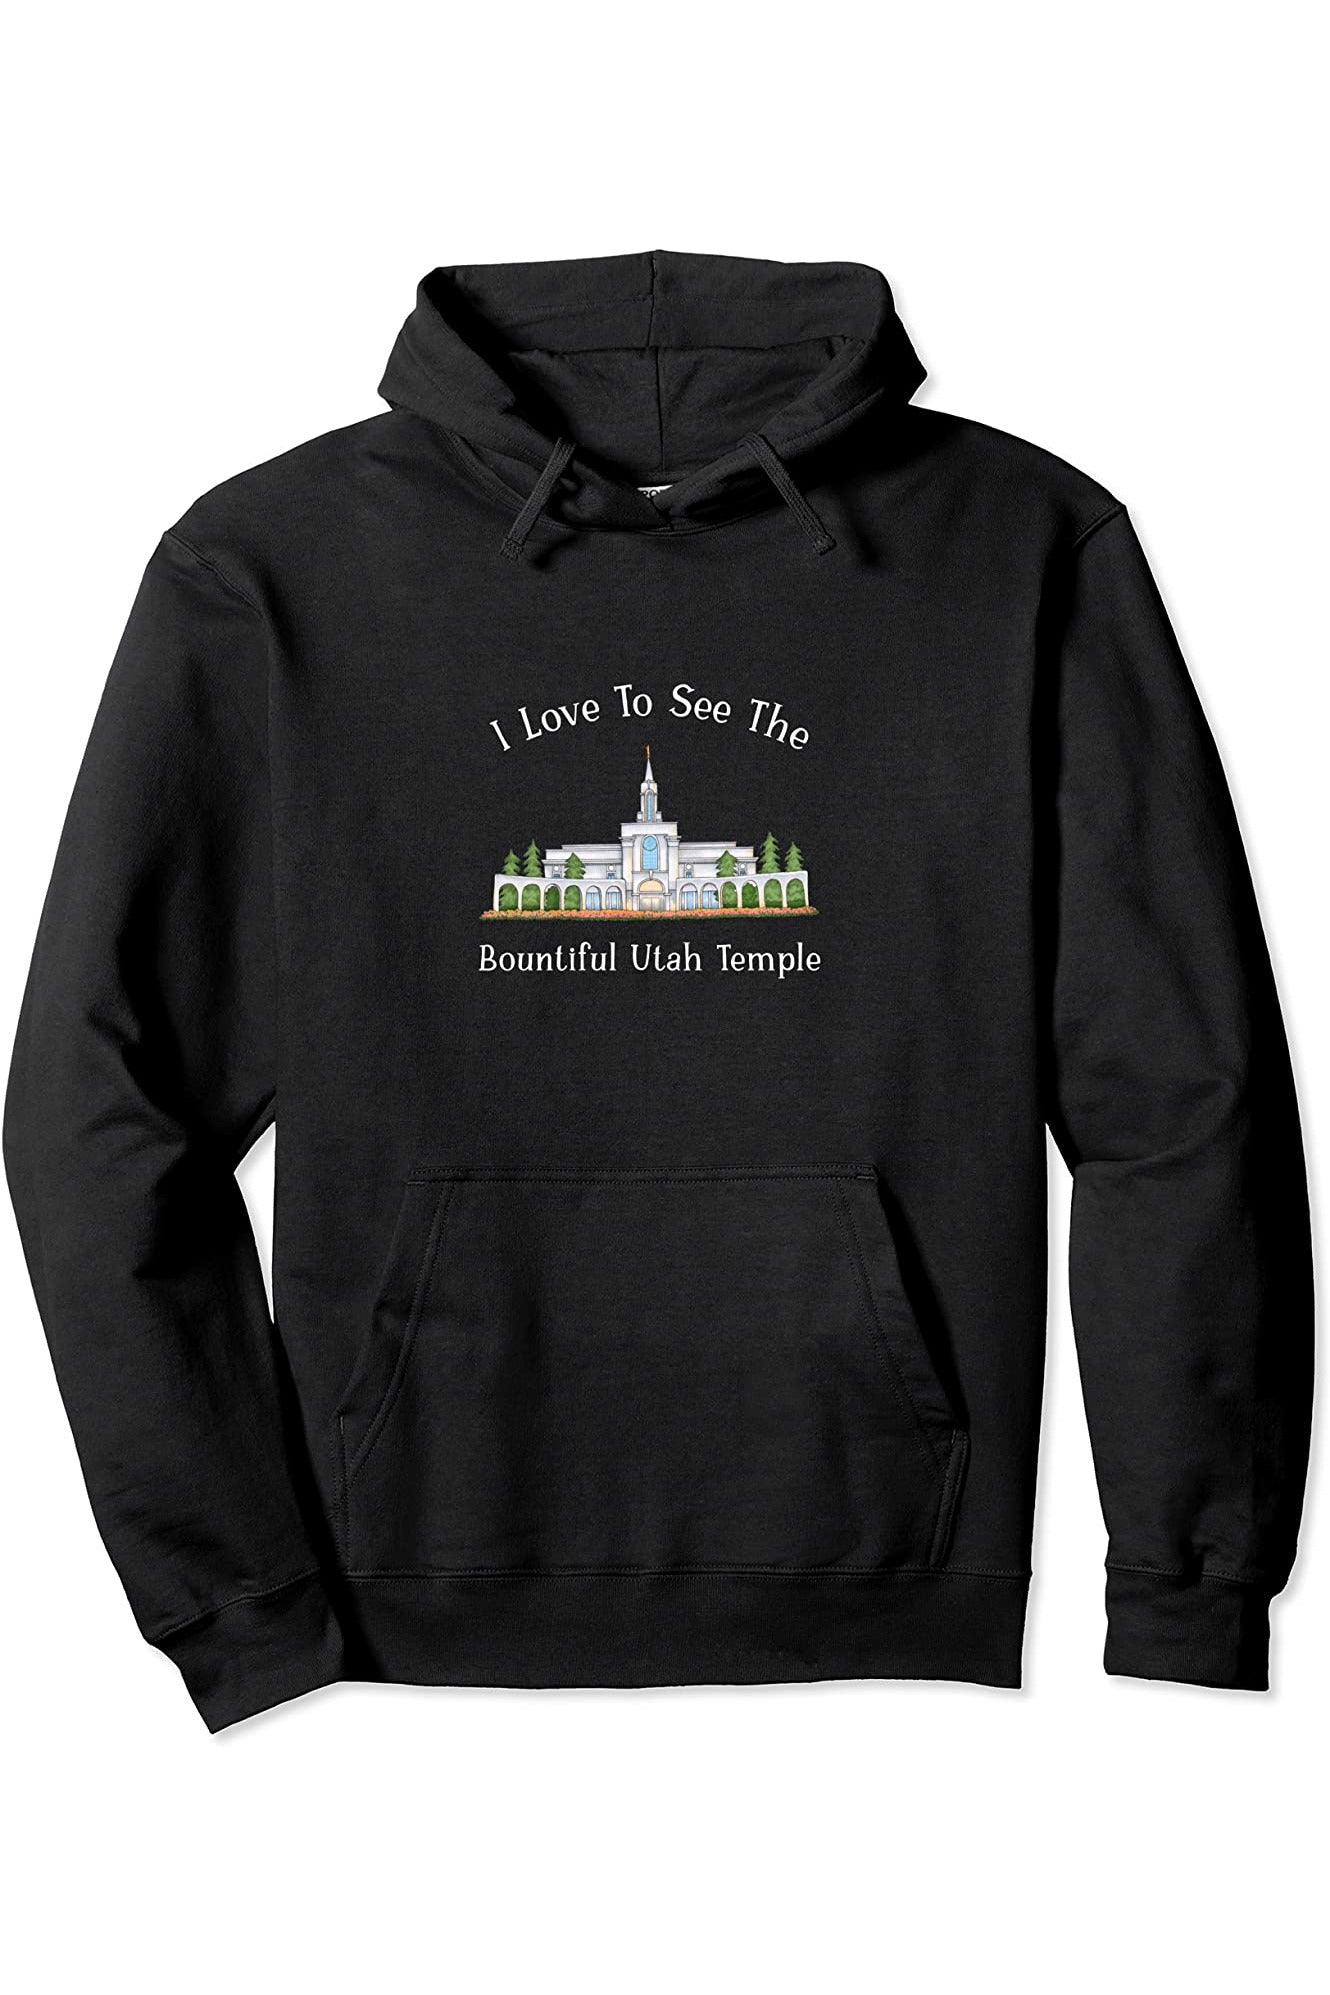 Bountiful Utah Temple Pullover Hoodie - Happy Style (English) US